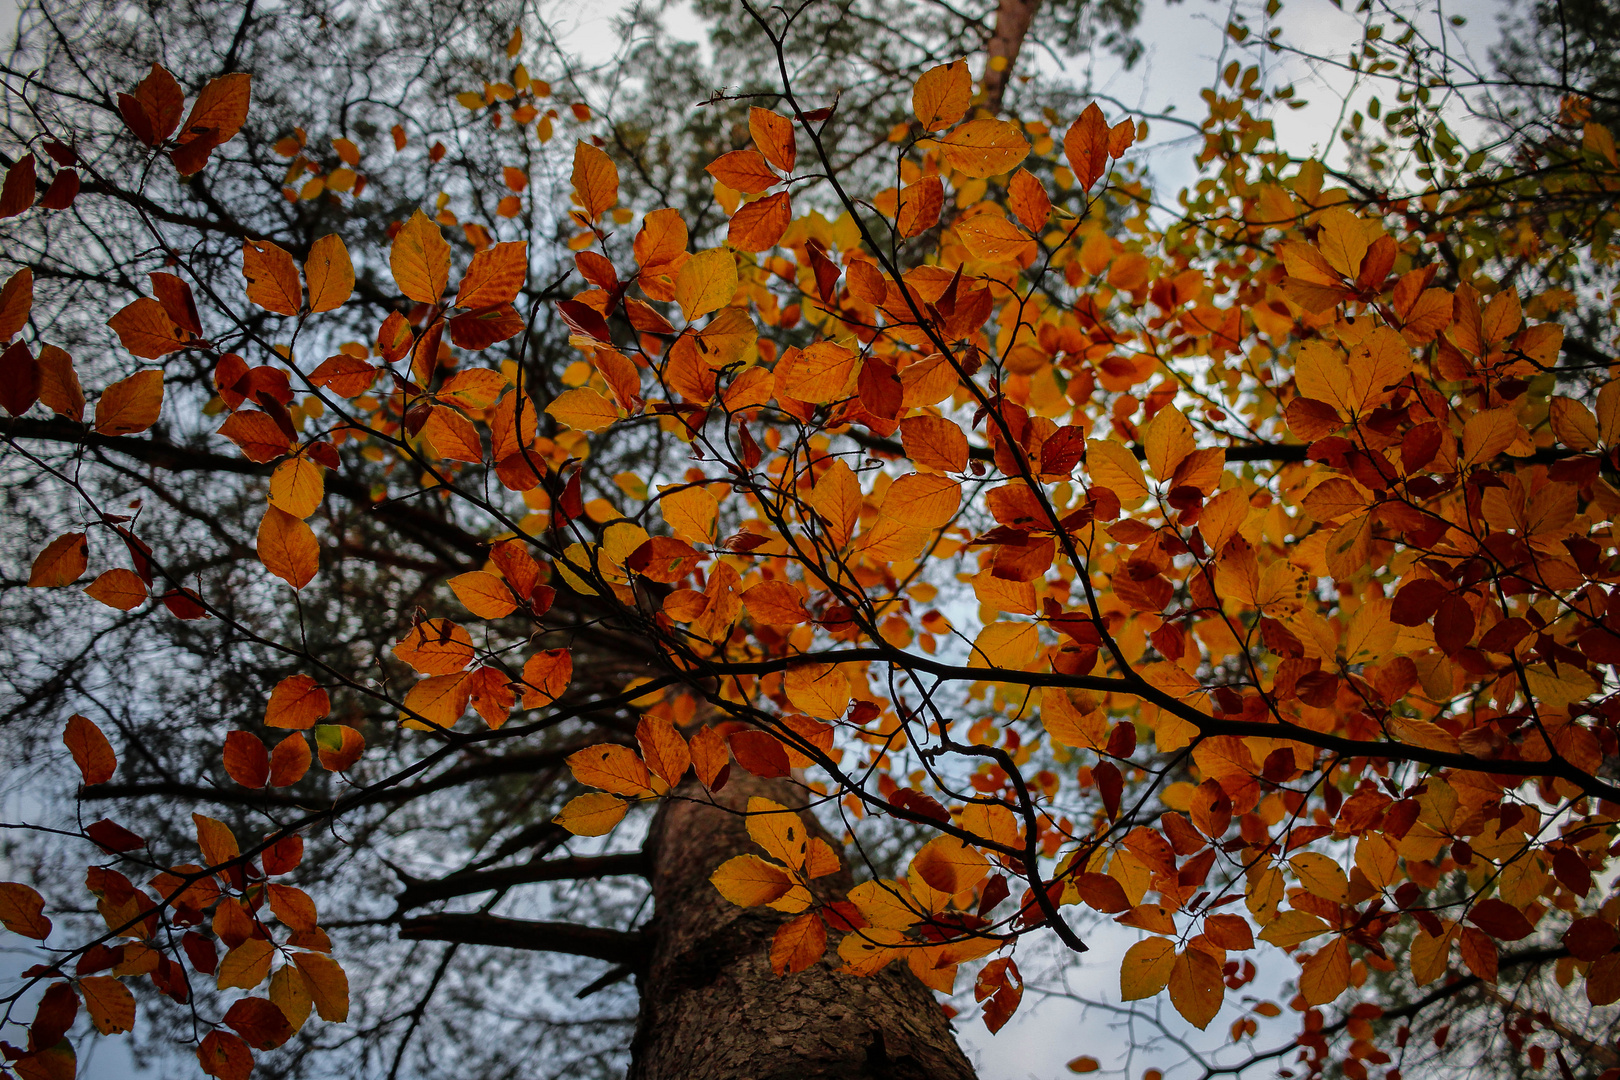 Wald im Herbstkleid II